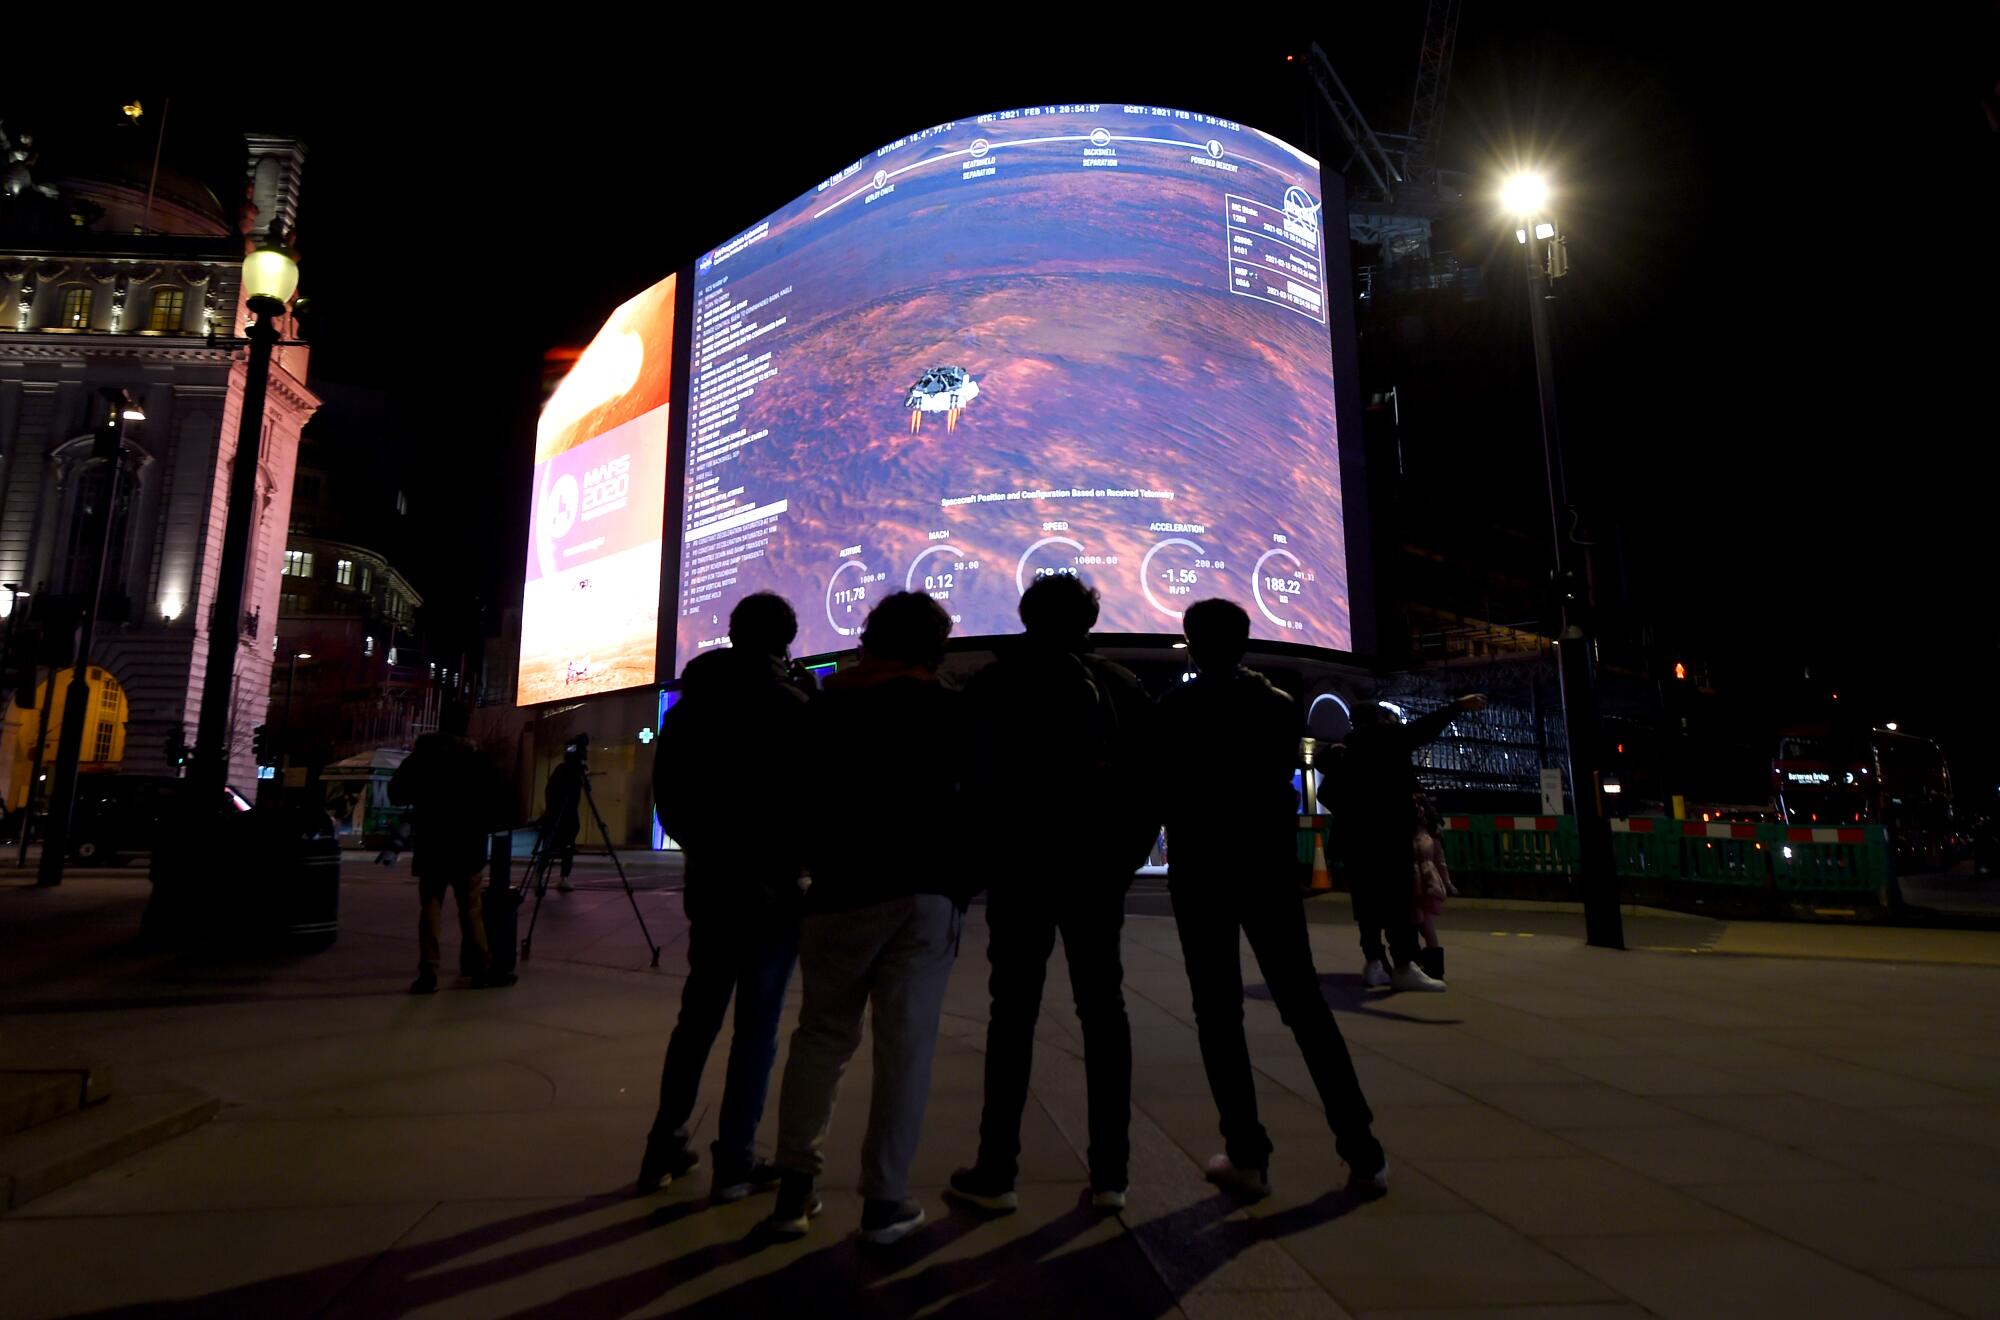 A massive outdoor screen shows a livestream of Mars rover landing